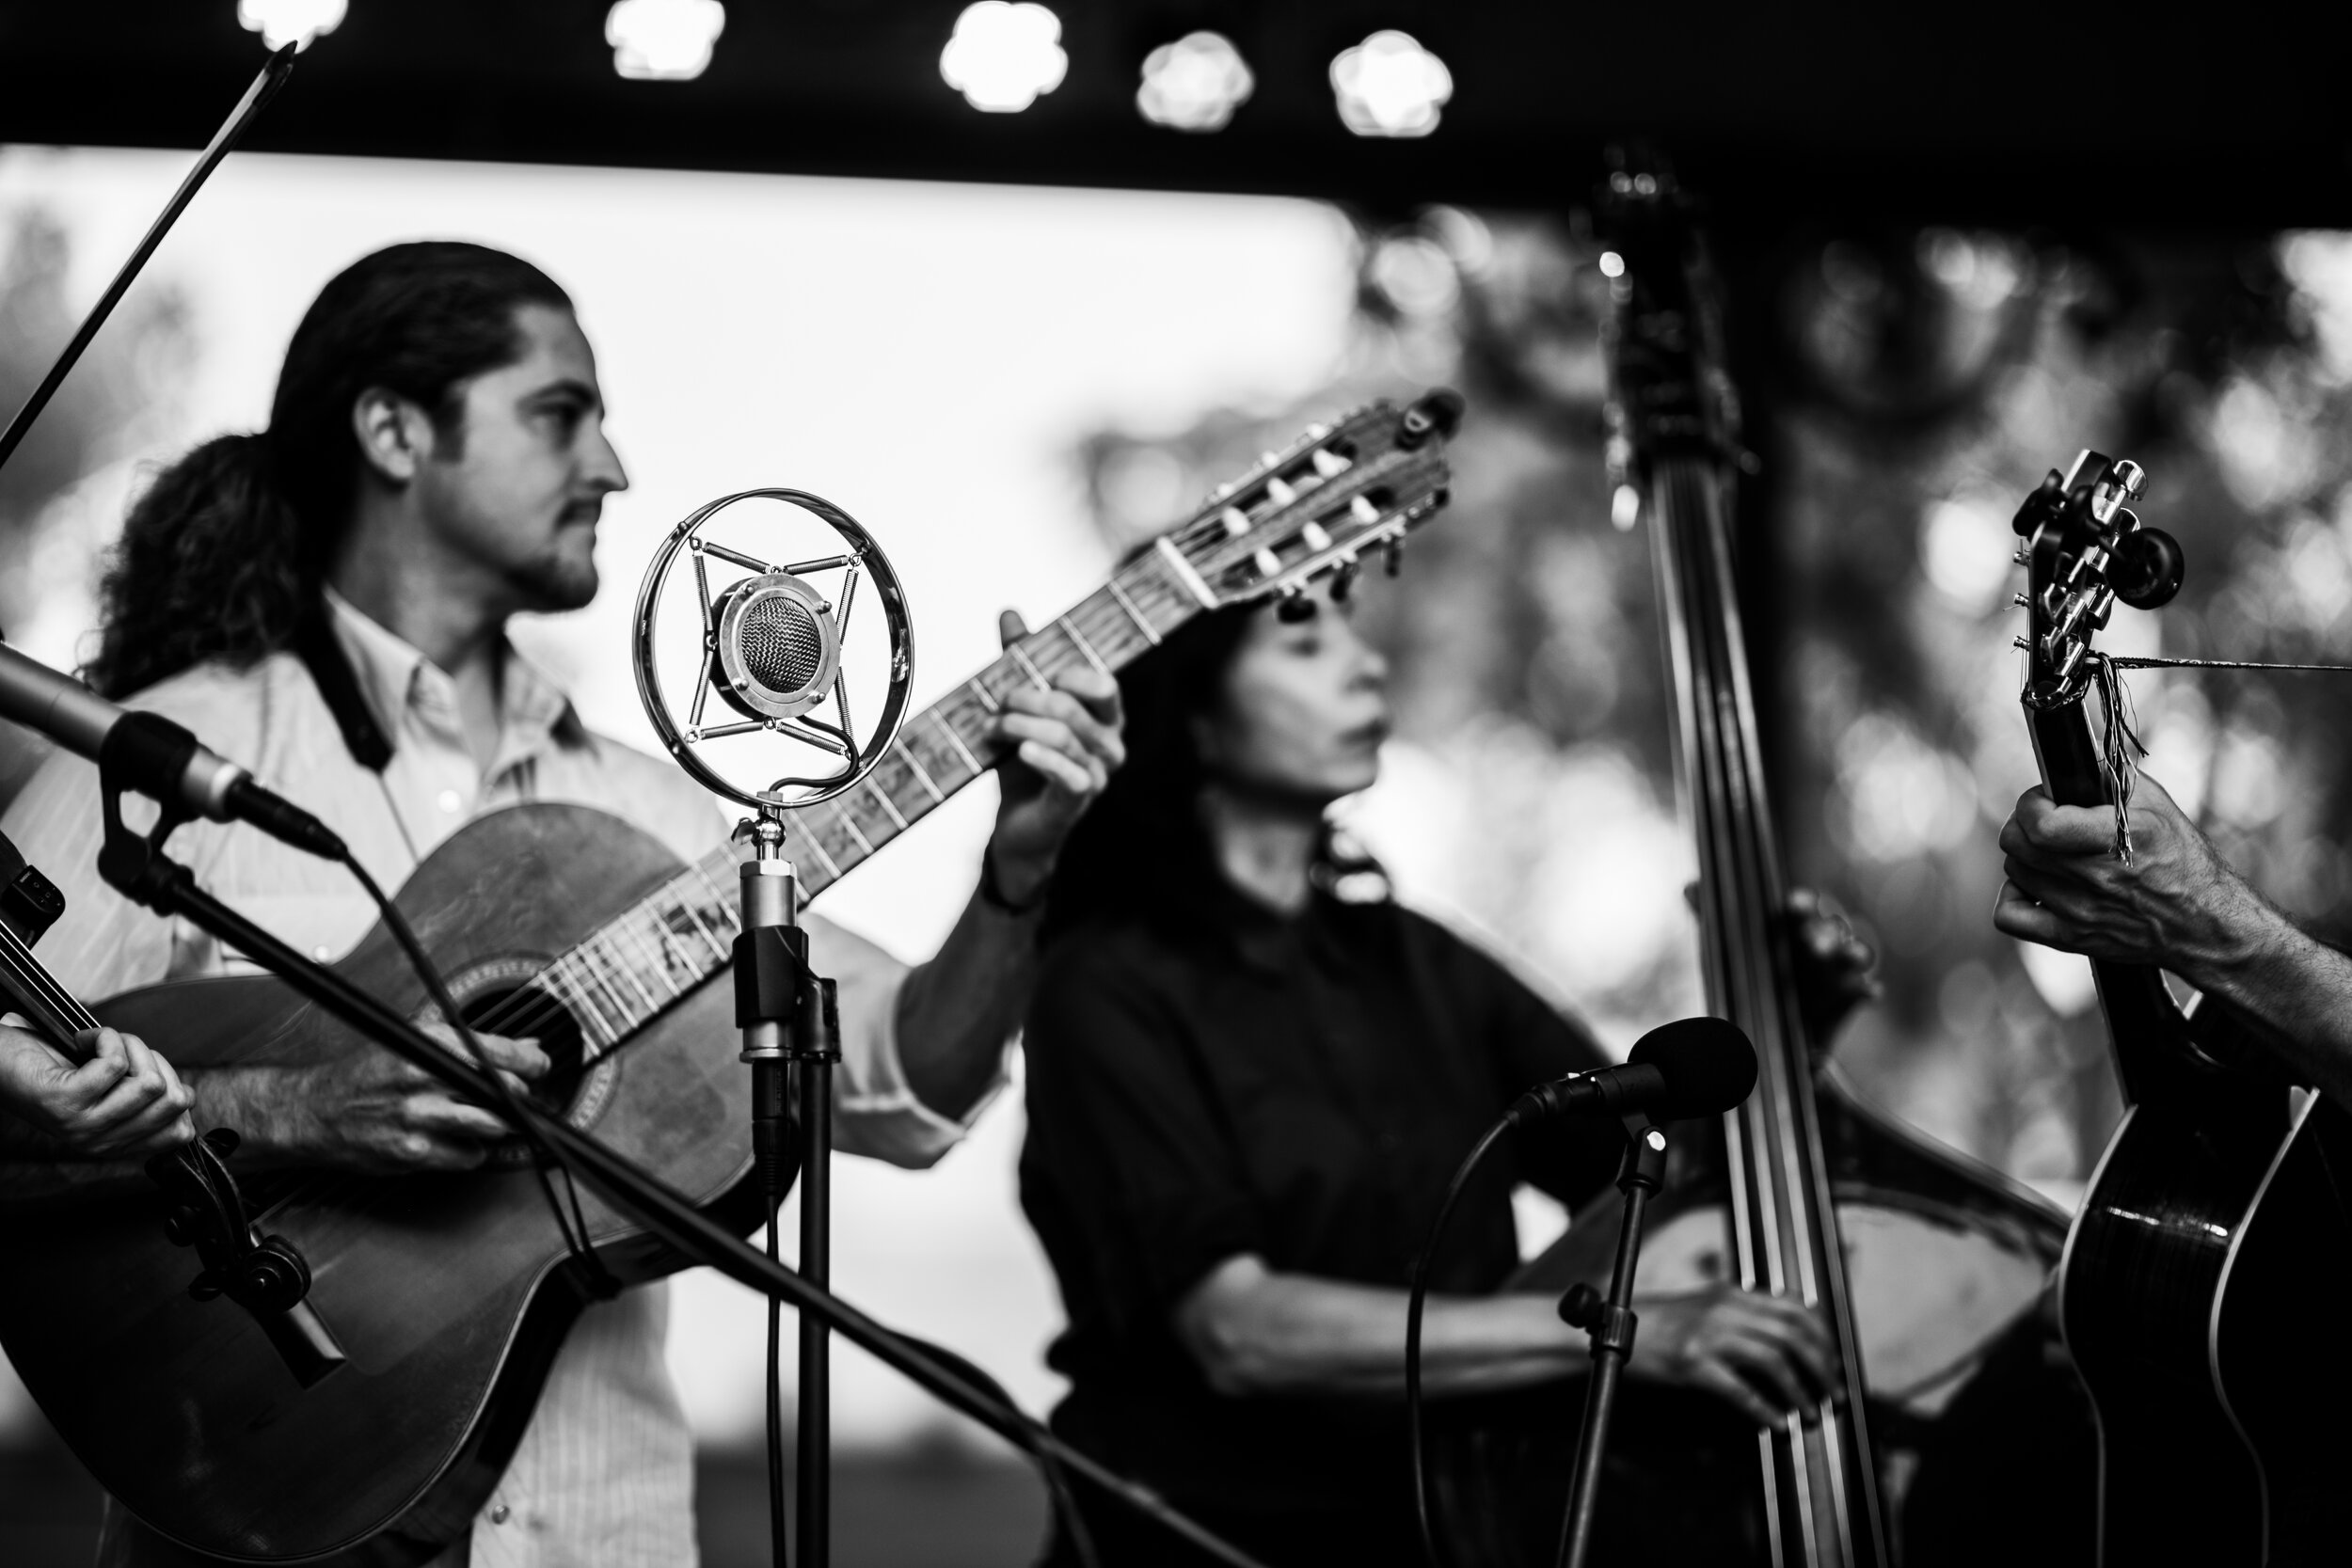 Santiago Romero, guitar; Tanya Nuñez, bass